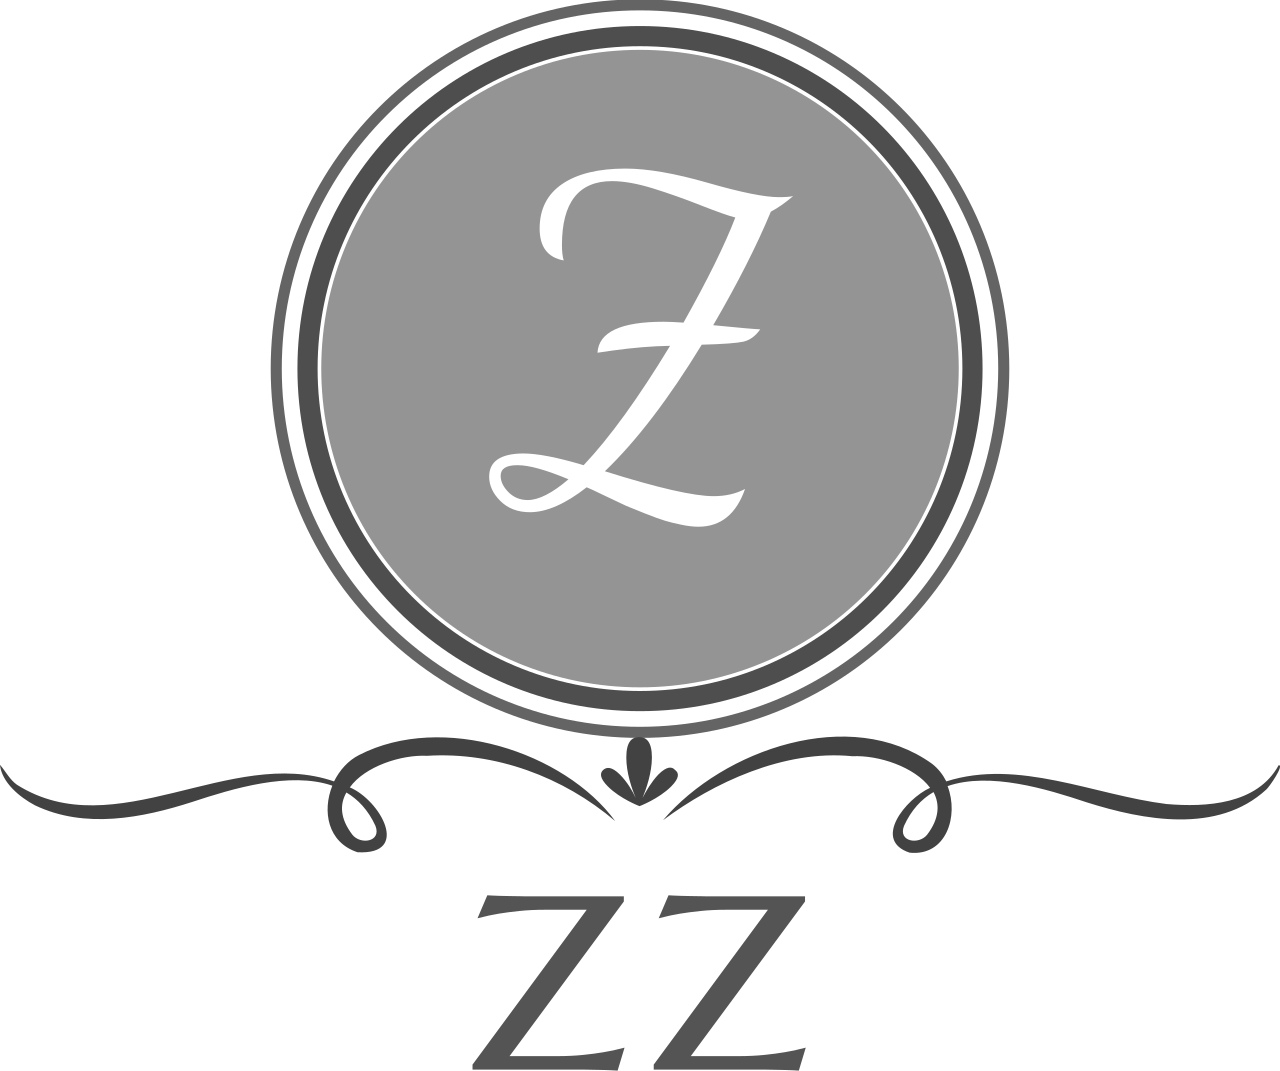 ZZ's logo